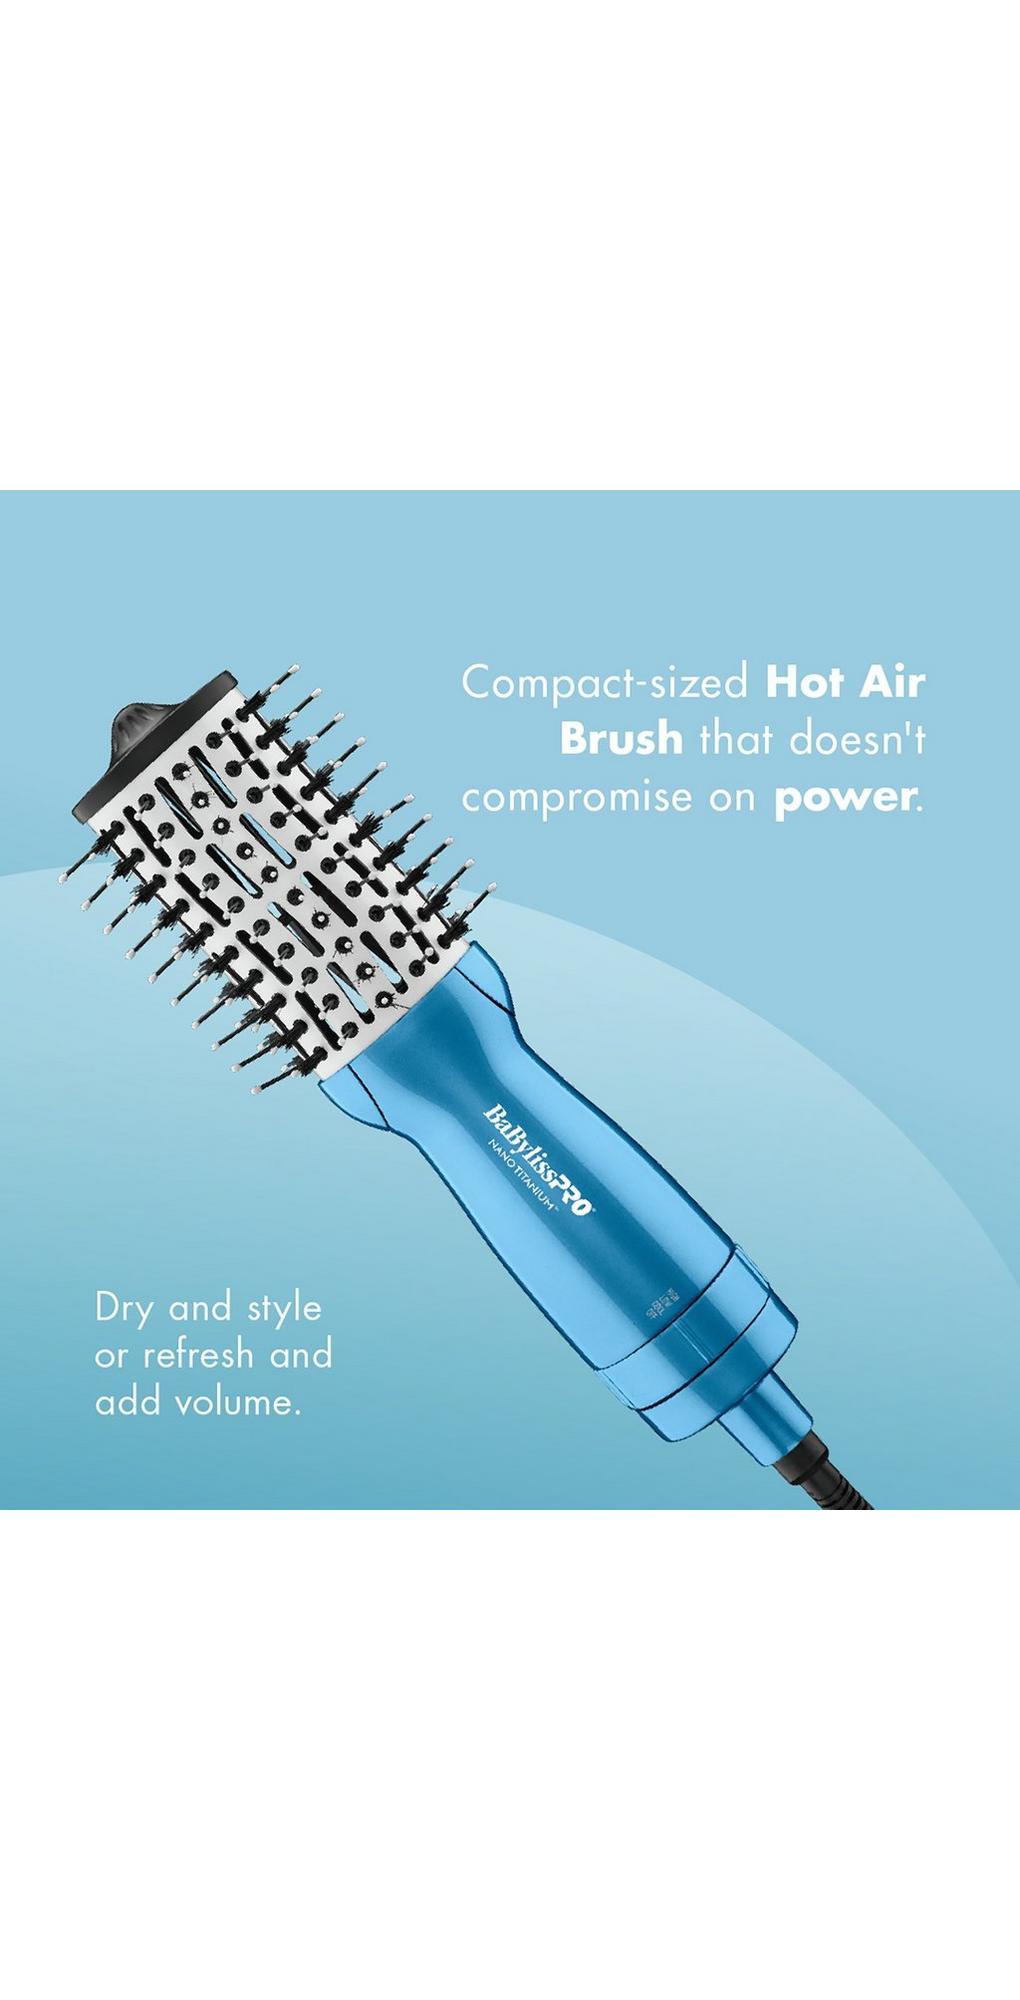 BaBylissPRO - Nano Titanium 2 Compact Hot Air Brush